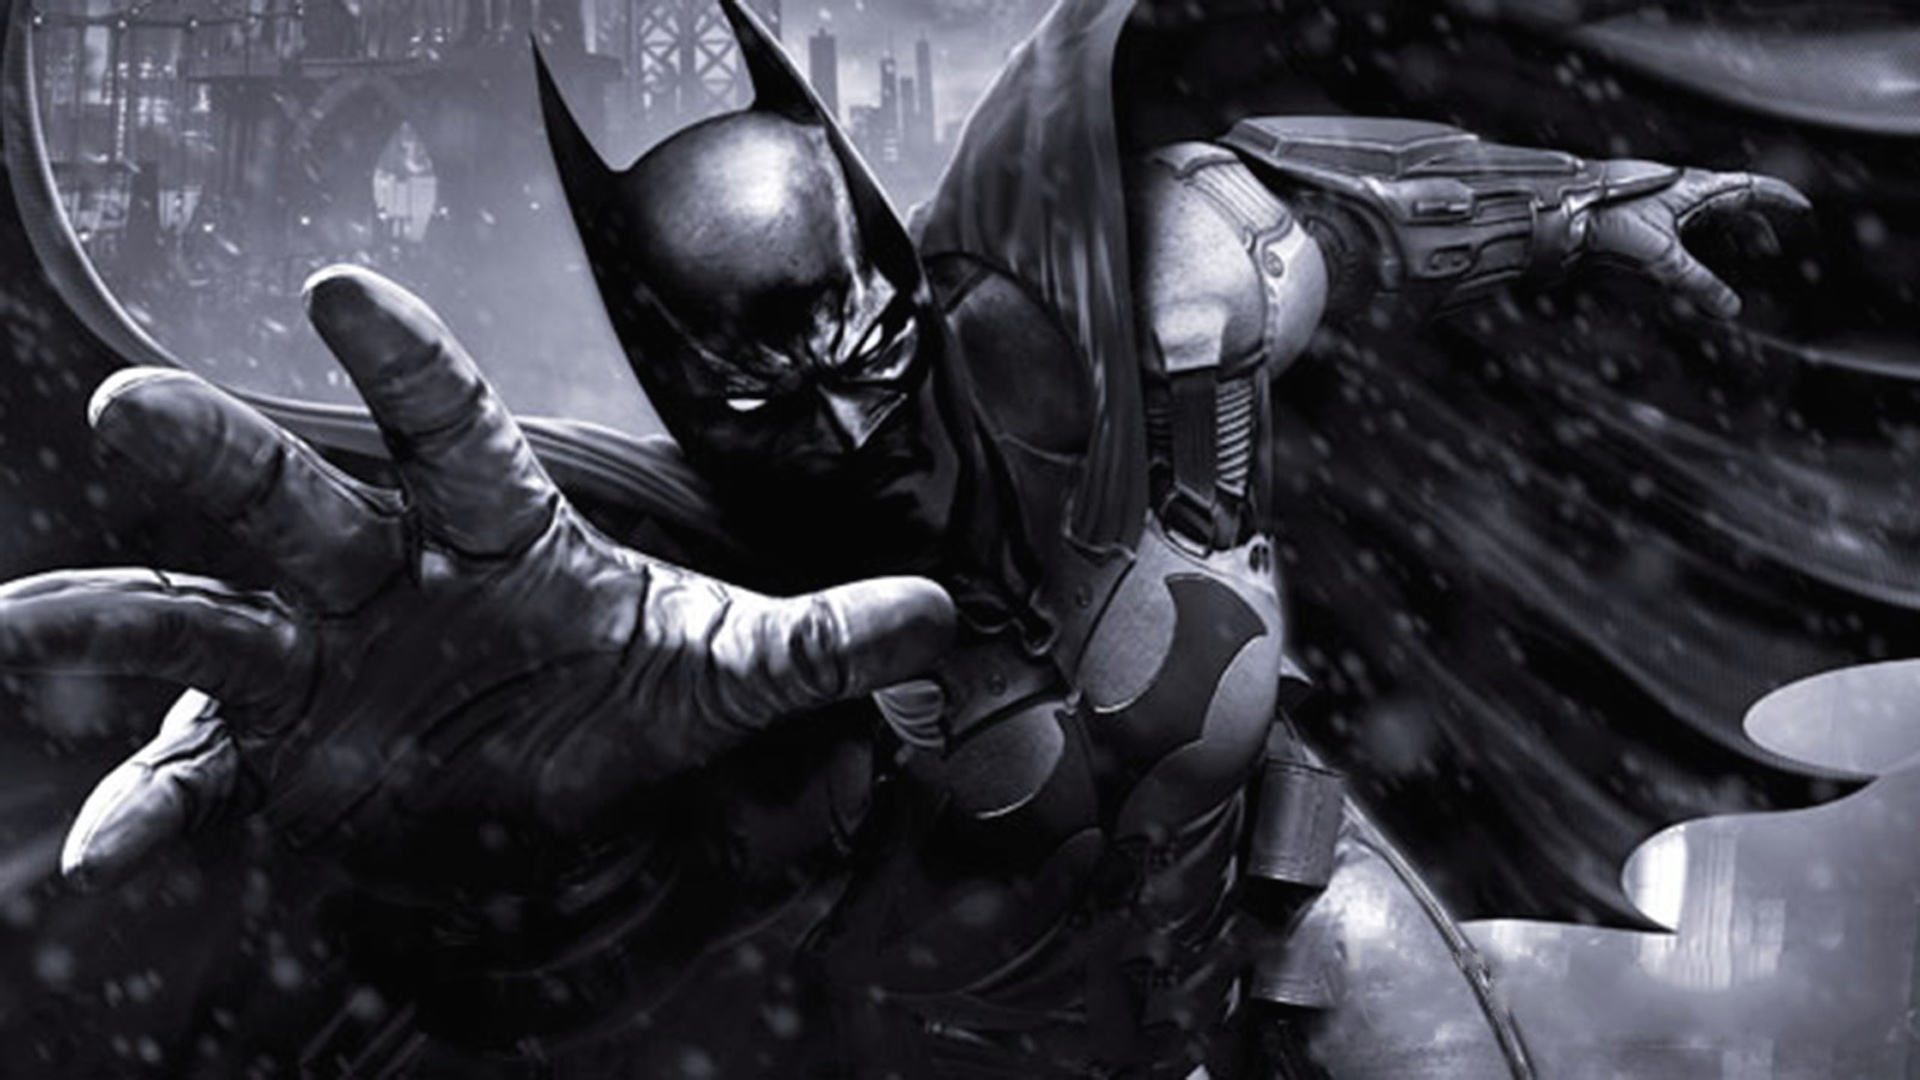 Batman Arkham Origins Wallpaper HD For Mobile Phone And Pc, Wallpaper13.com